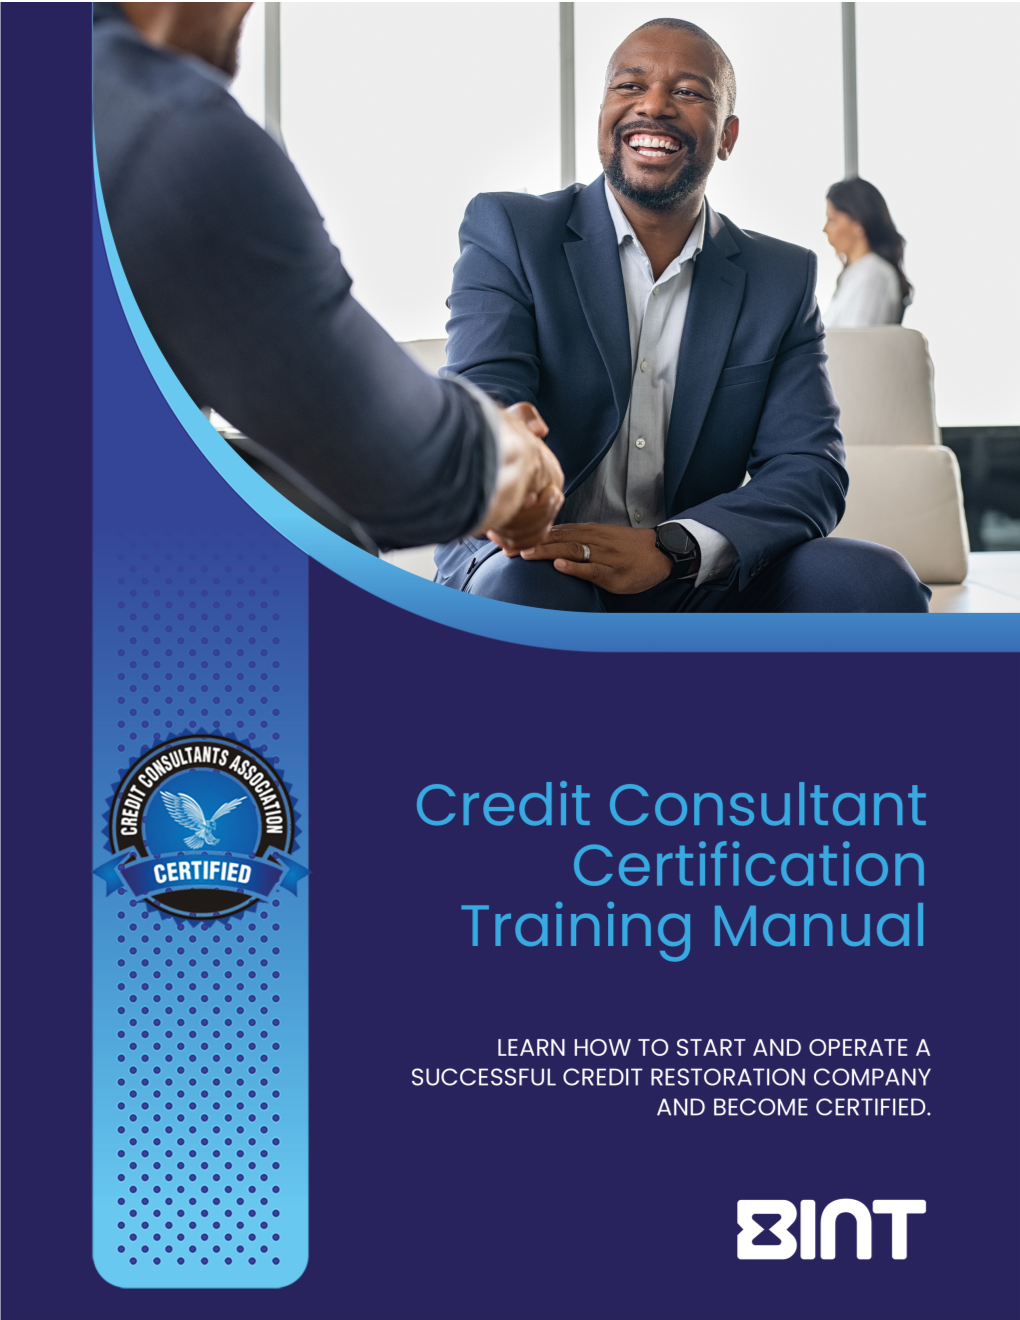 Credit Consultant Certification Training Manual